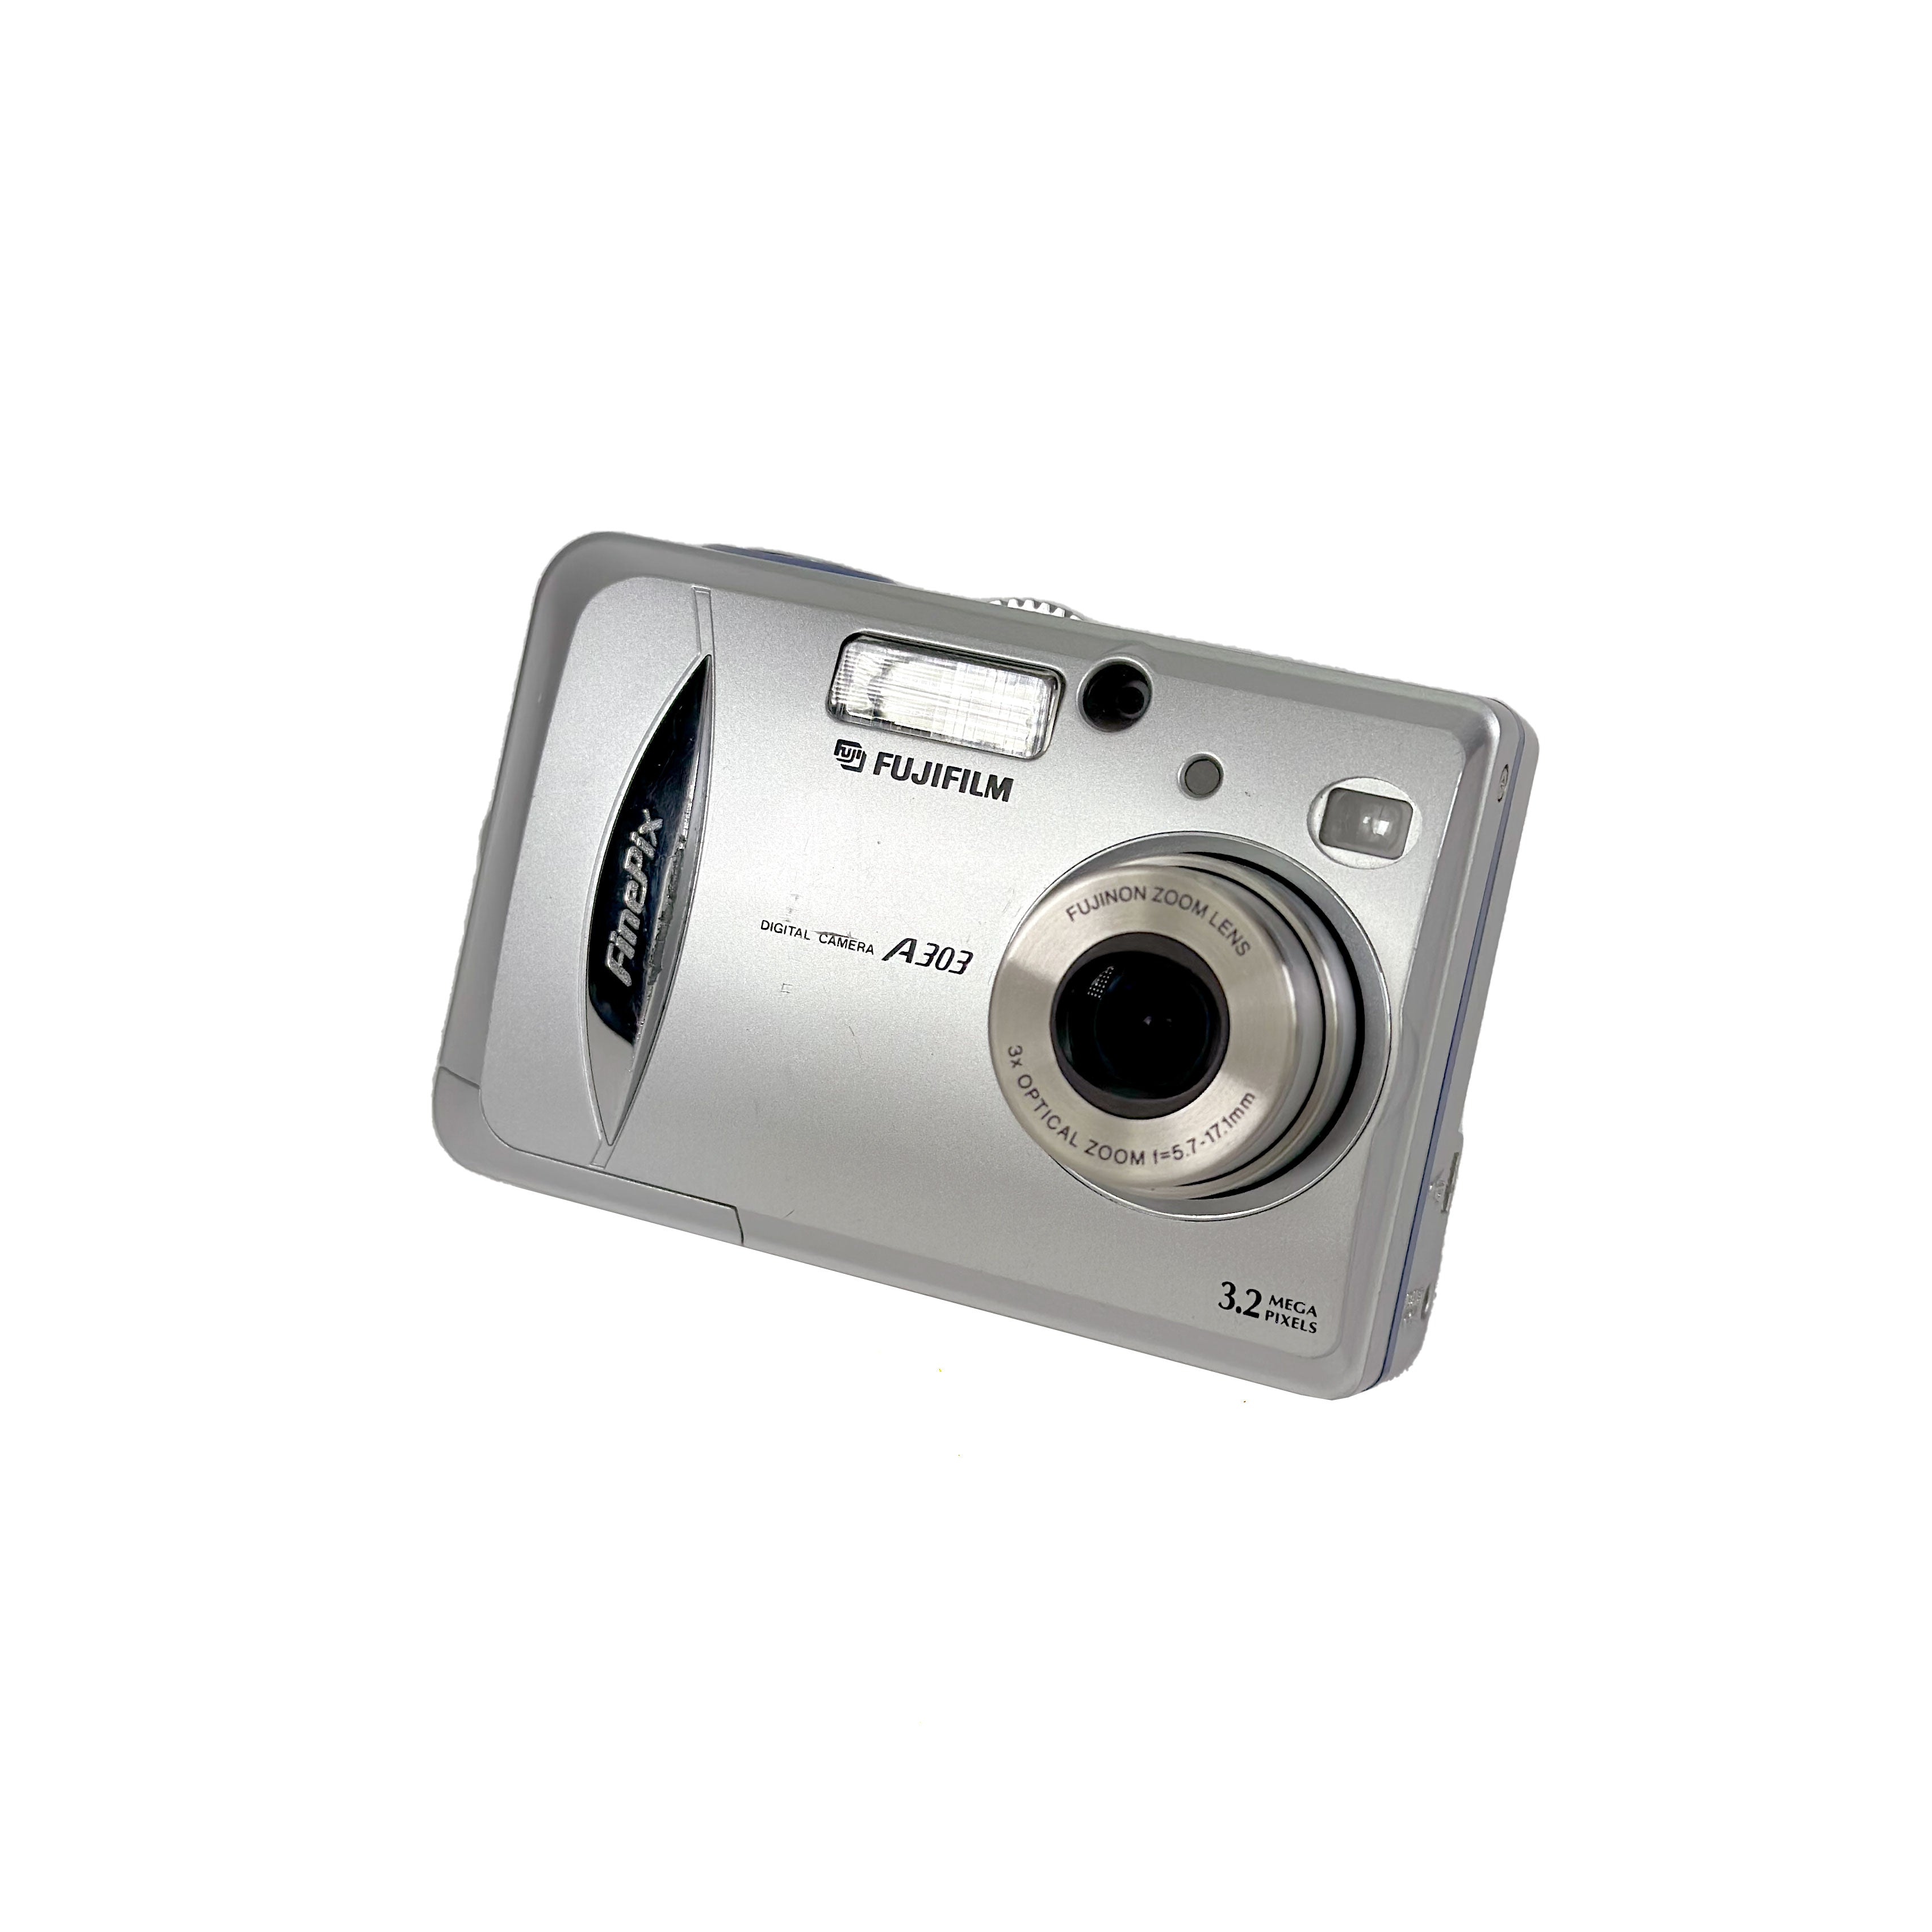 Fujifilm A303 Digital Compact